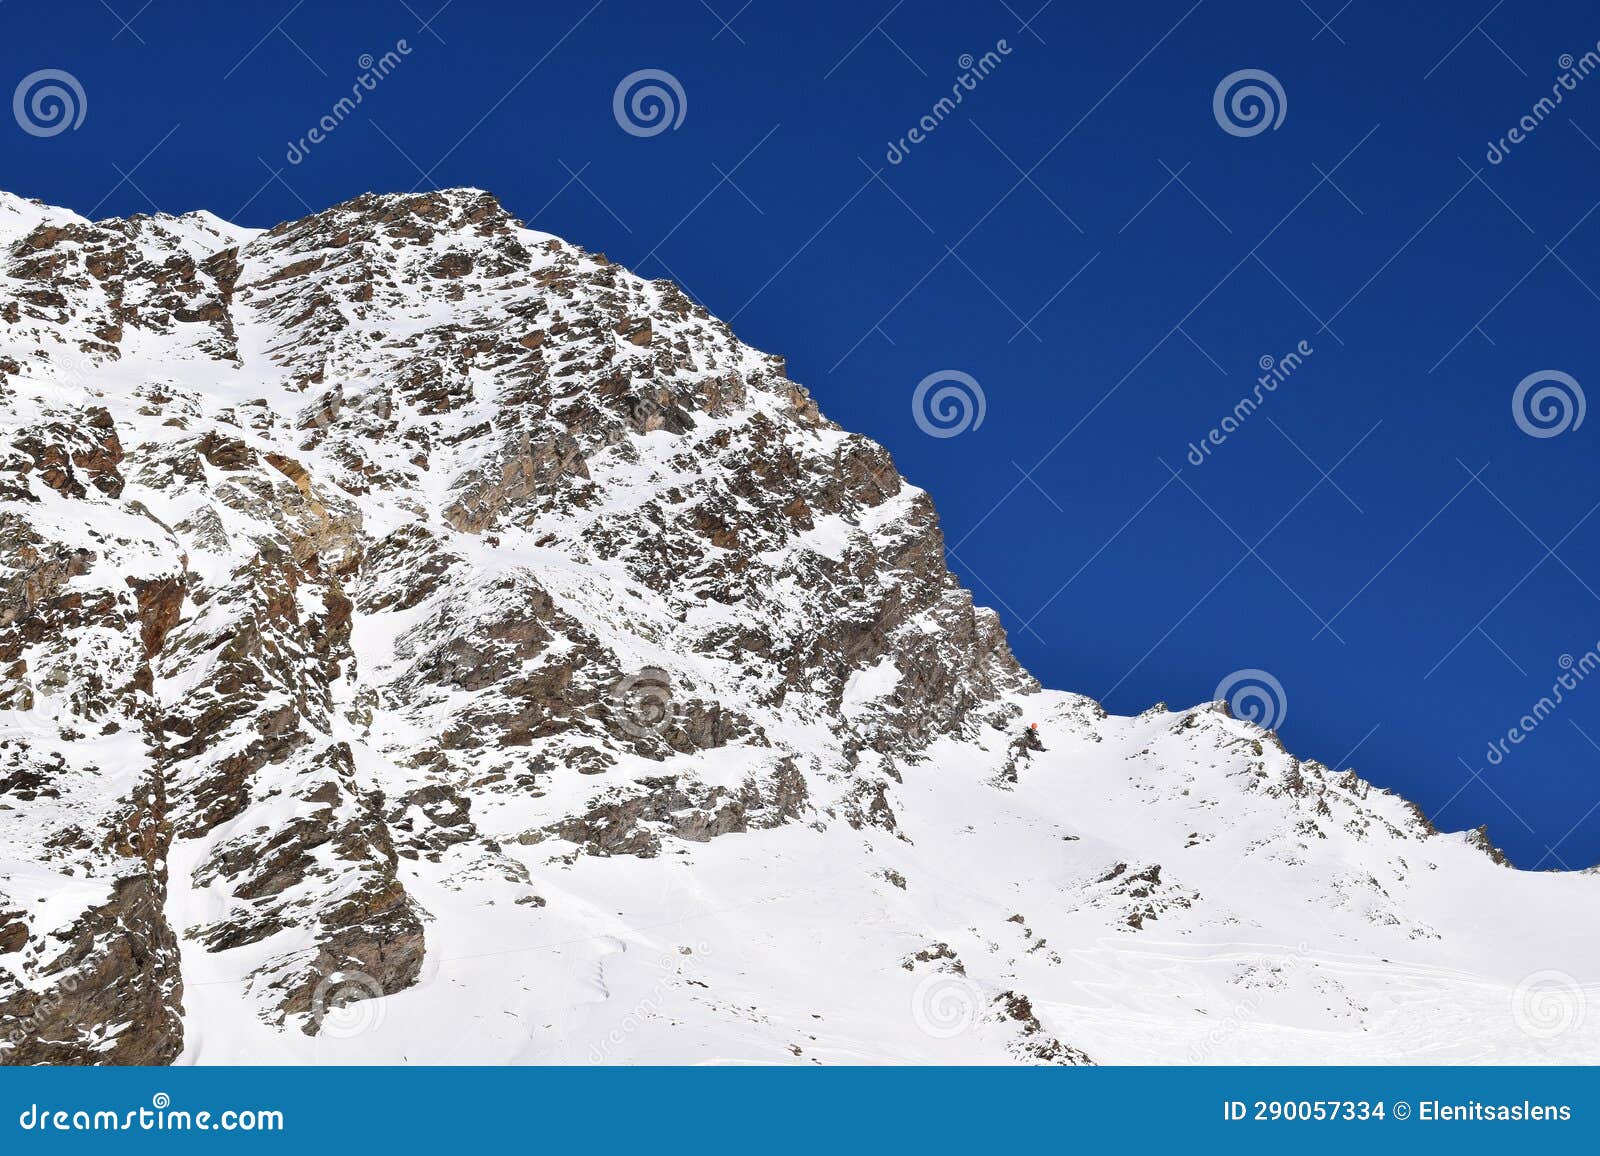 snowcapped mountain in austria, the Ãtztal alps valley